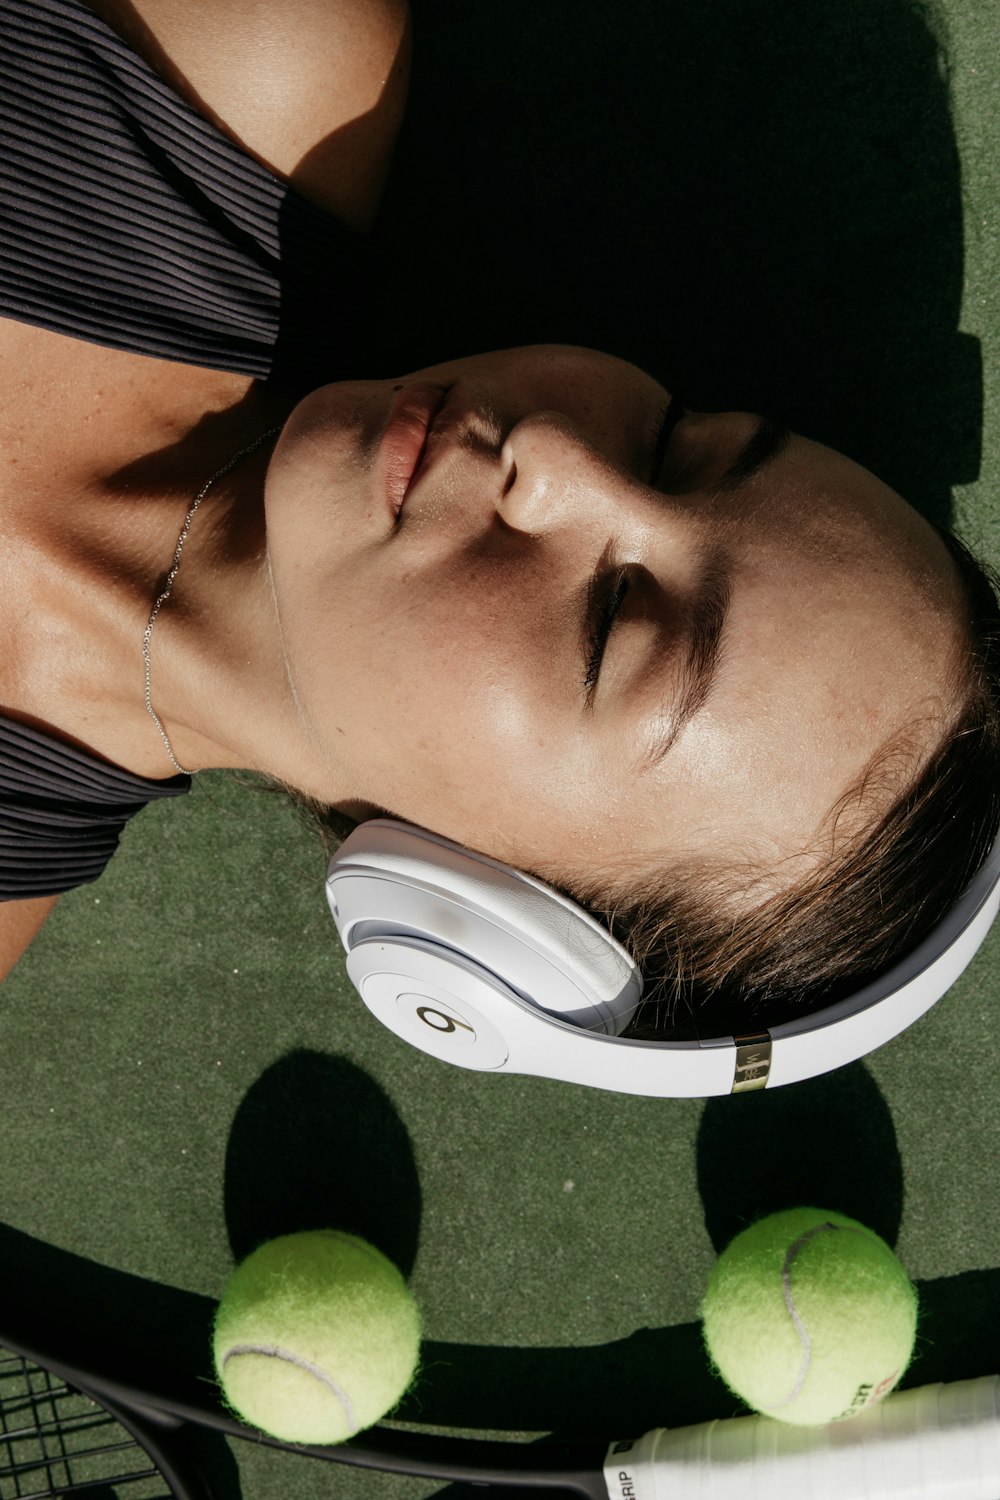 woman using white Beats headphones beside two green tennis ball